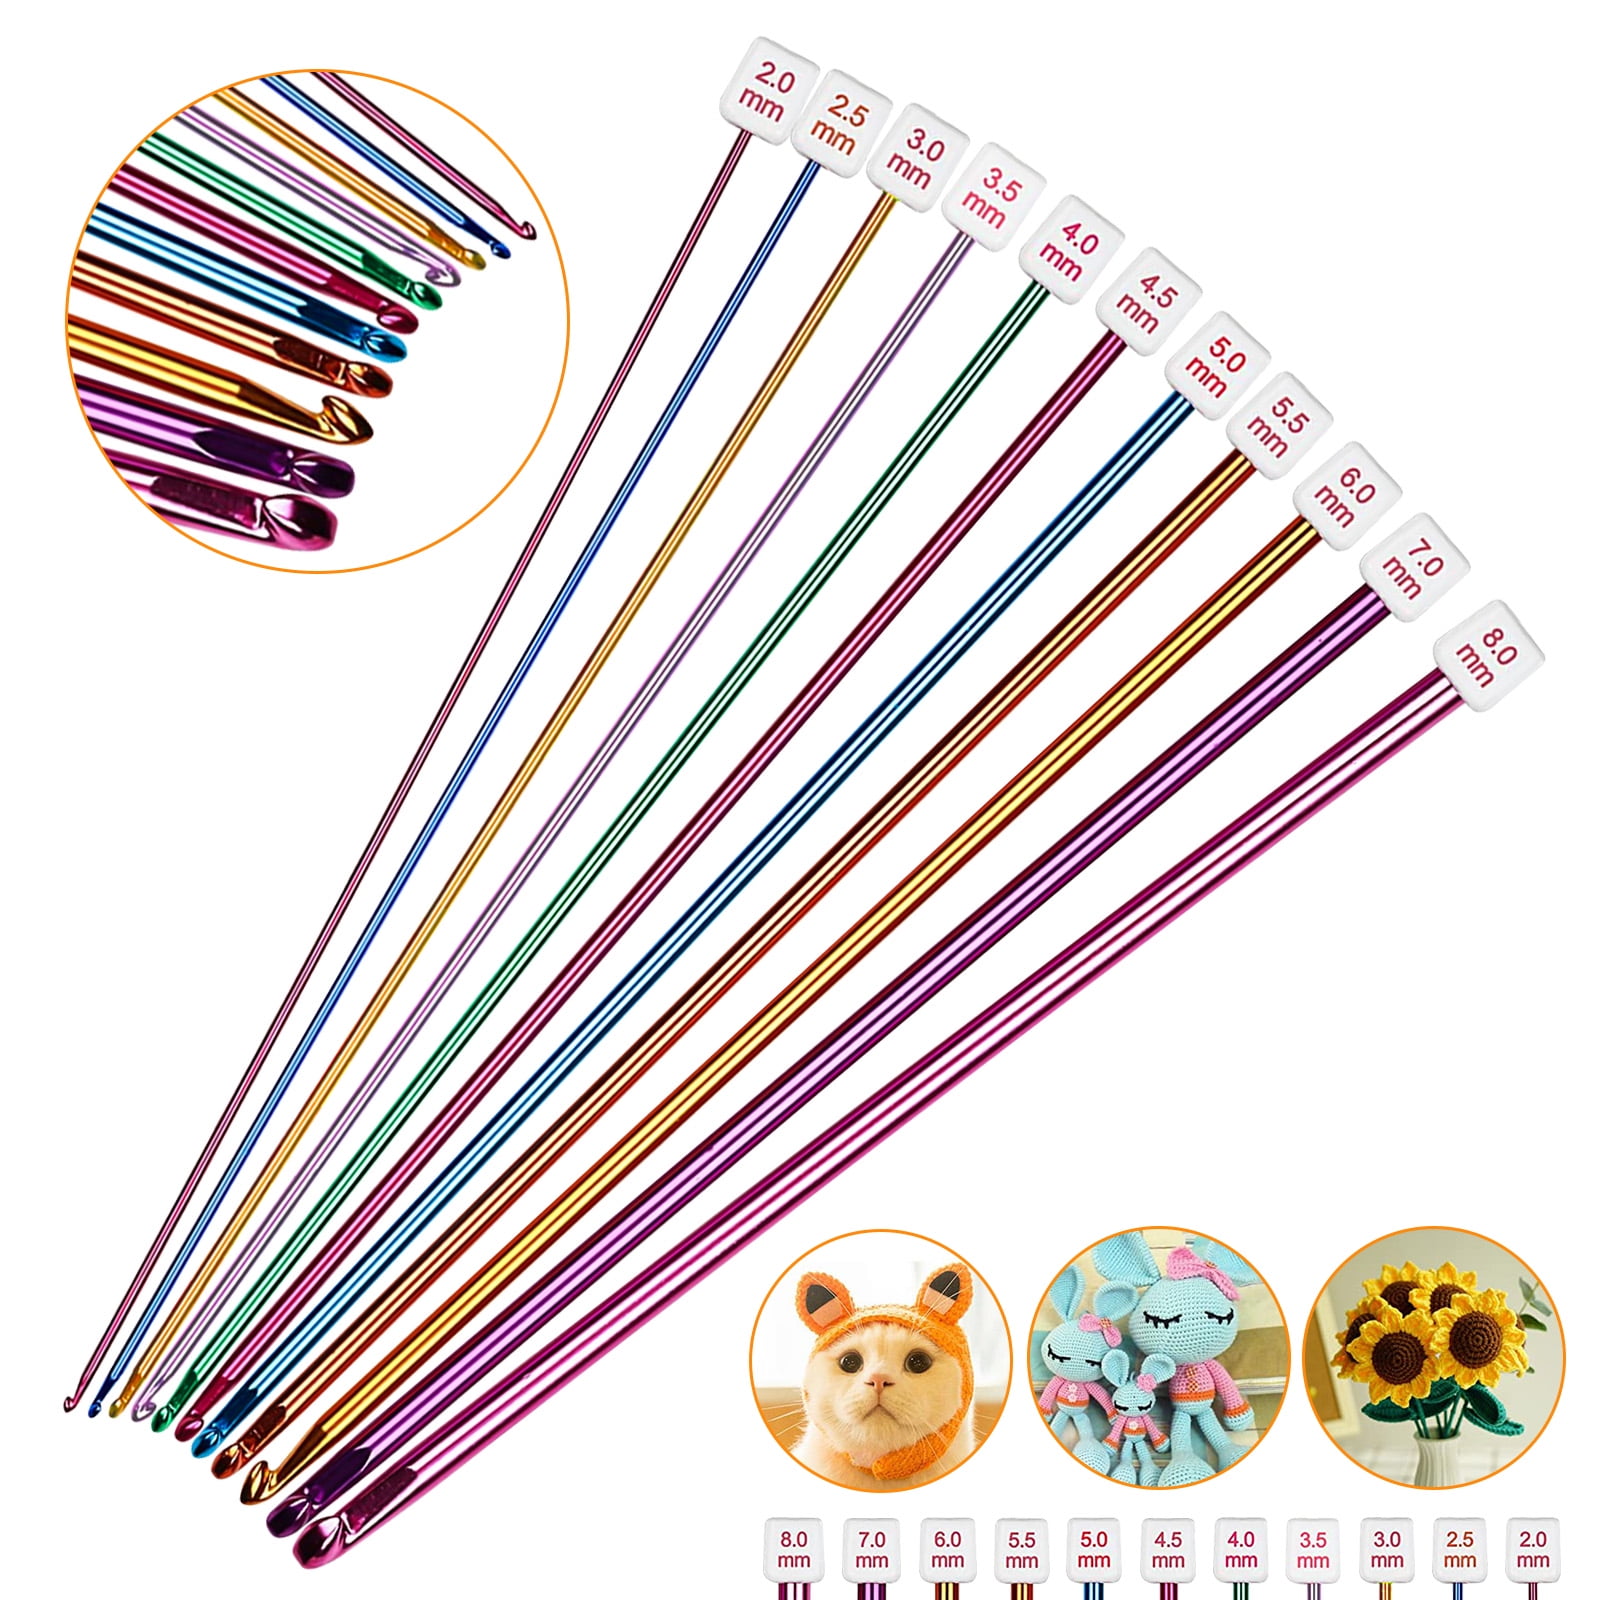 Crochet Hooks Set - Set of 12 Tunisian Crochet Needles - 2-10 mm